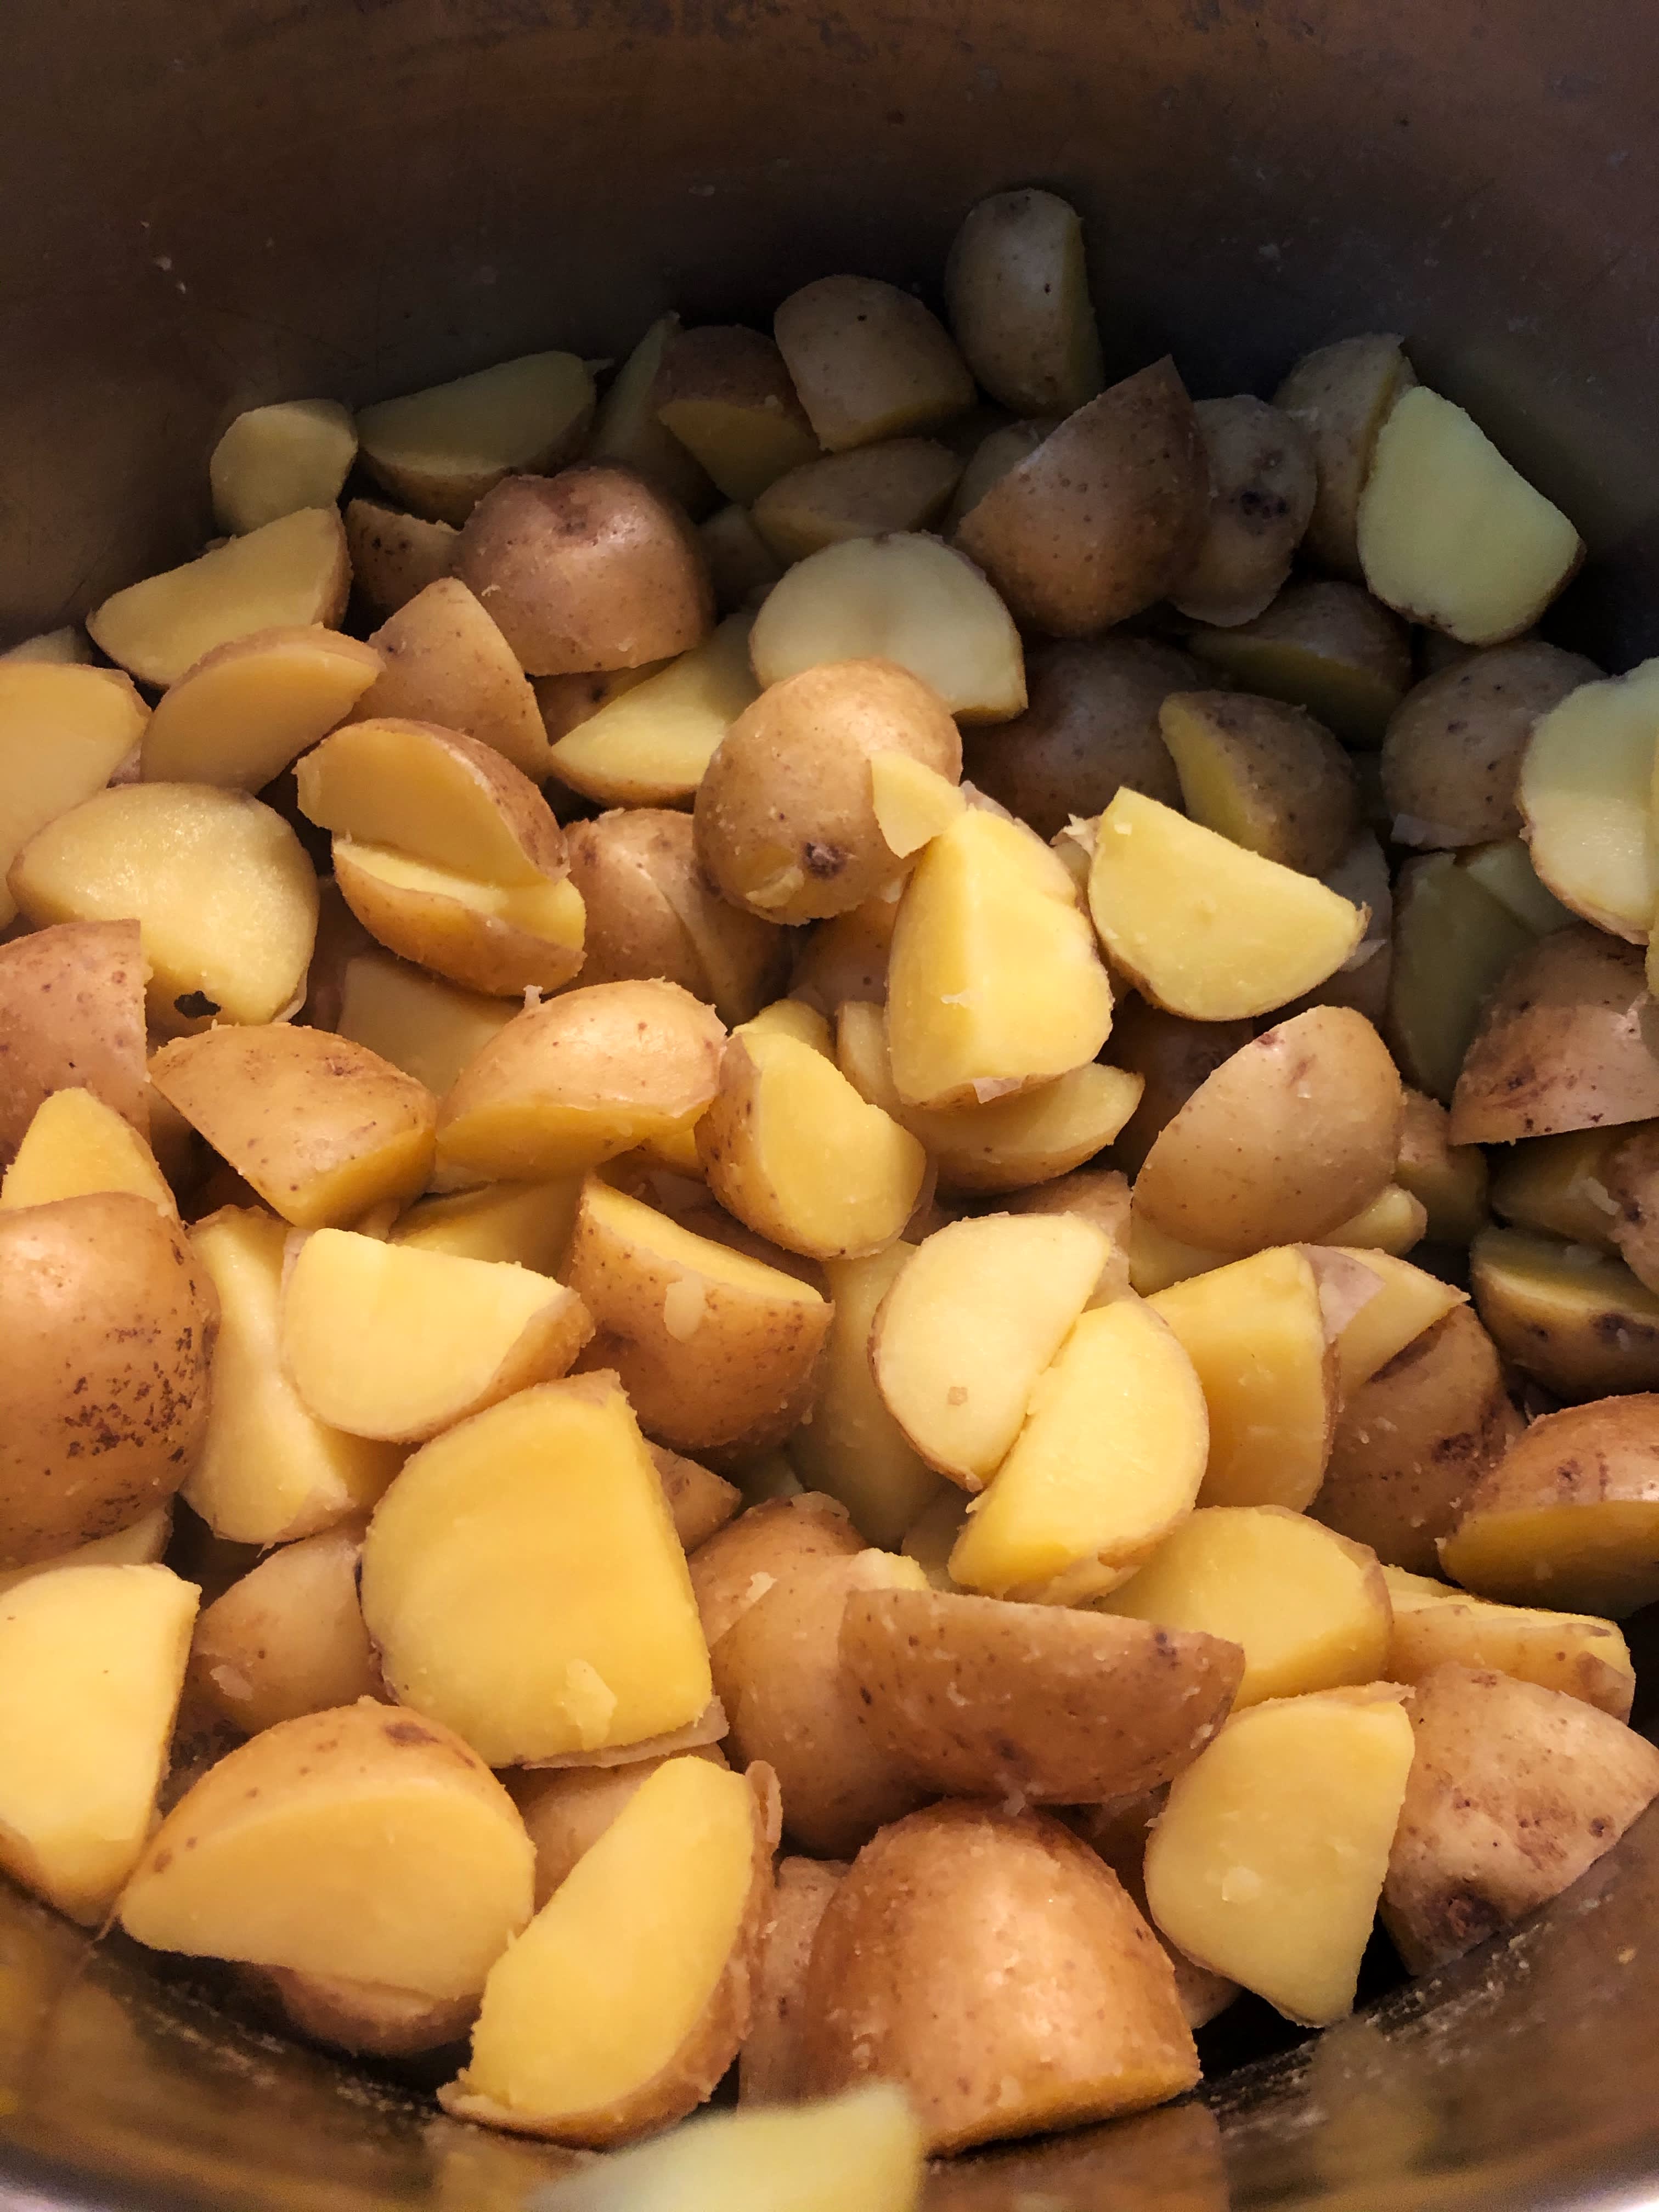 How To Make the Famous Crispy Potatoes on TikTok